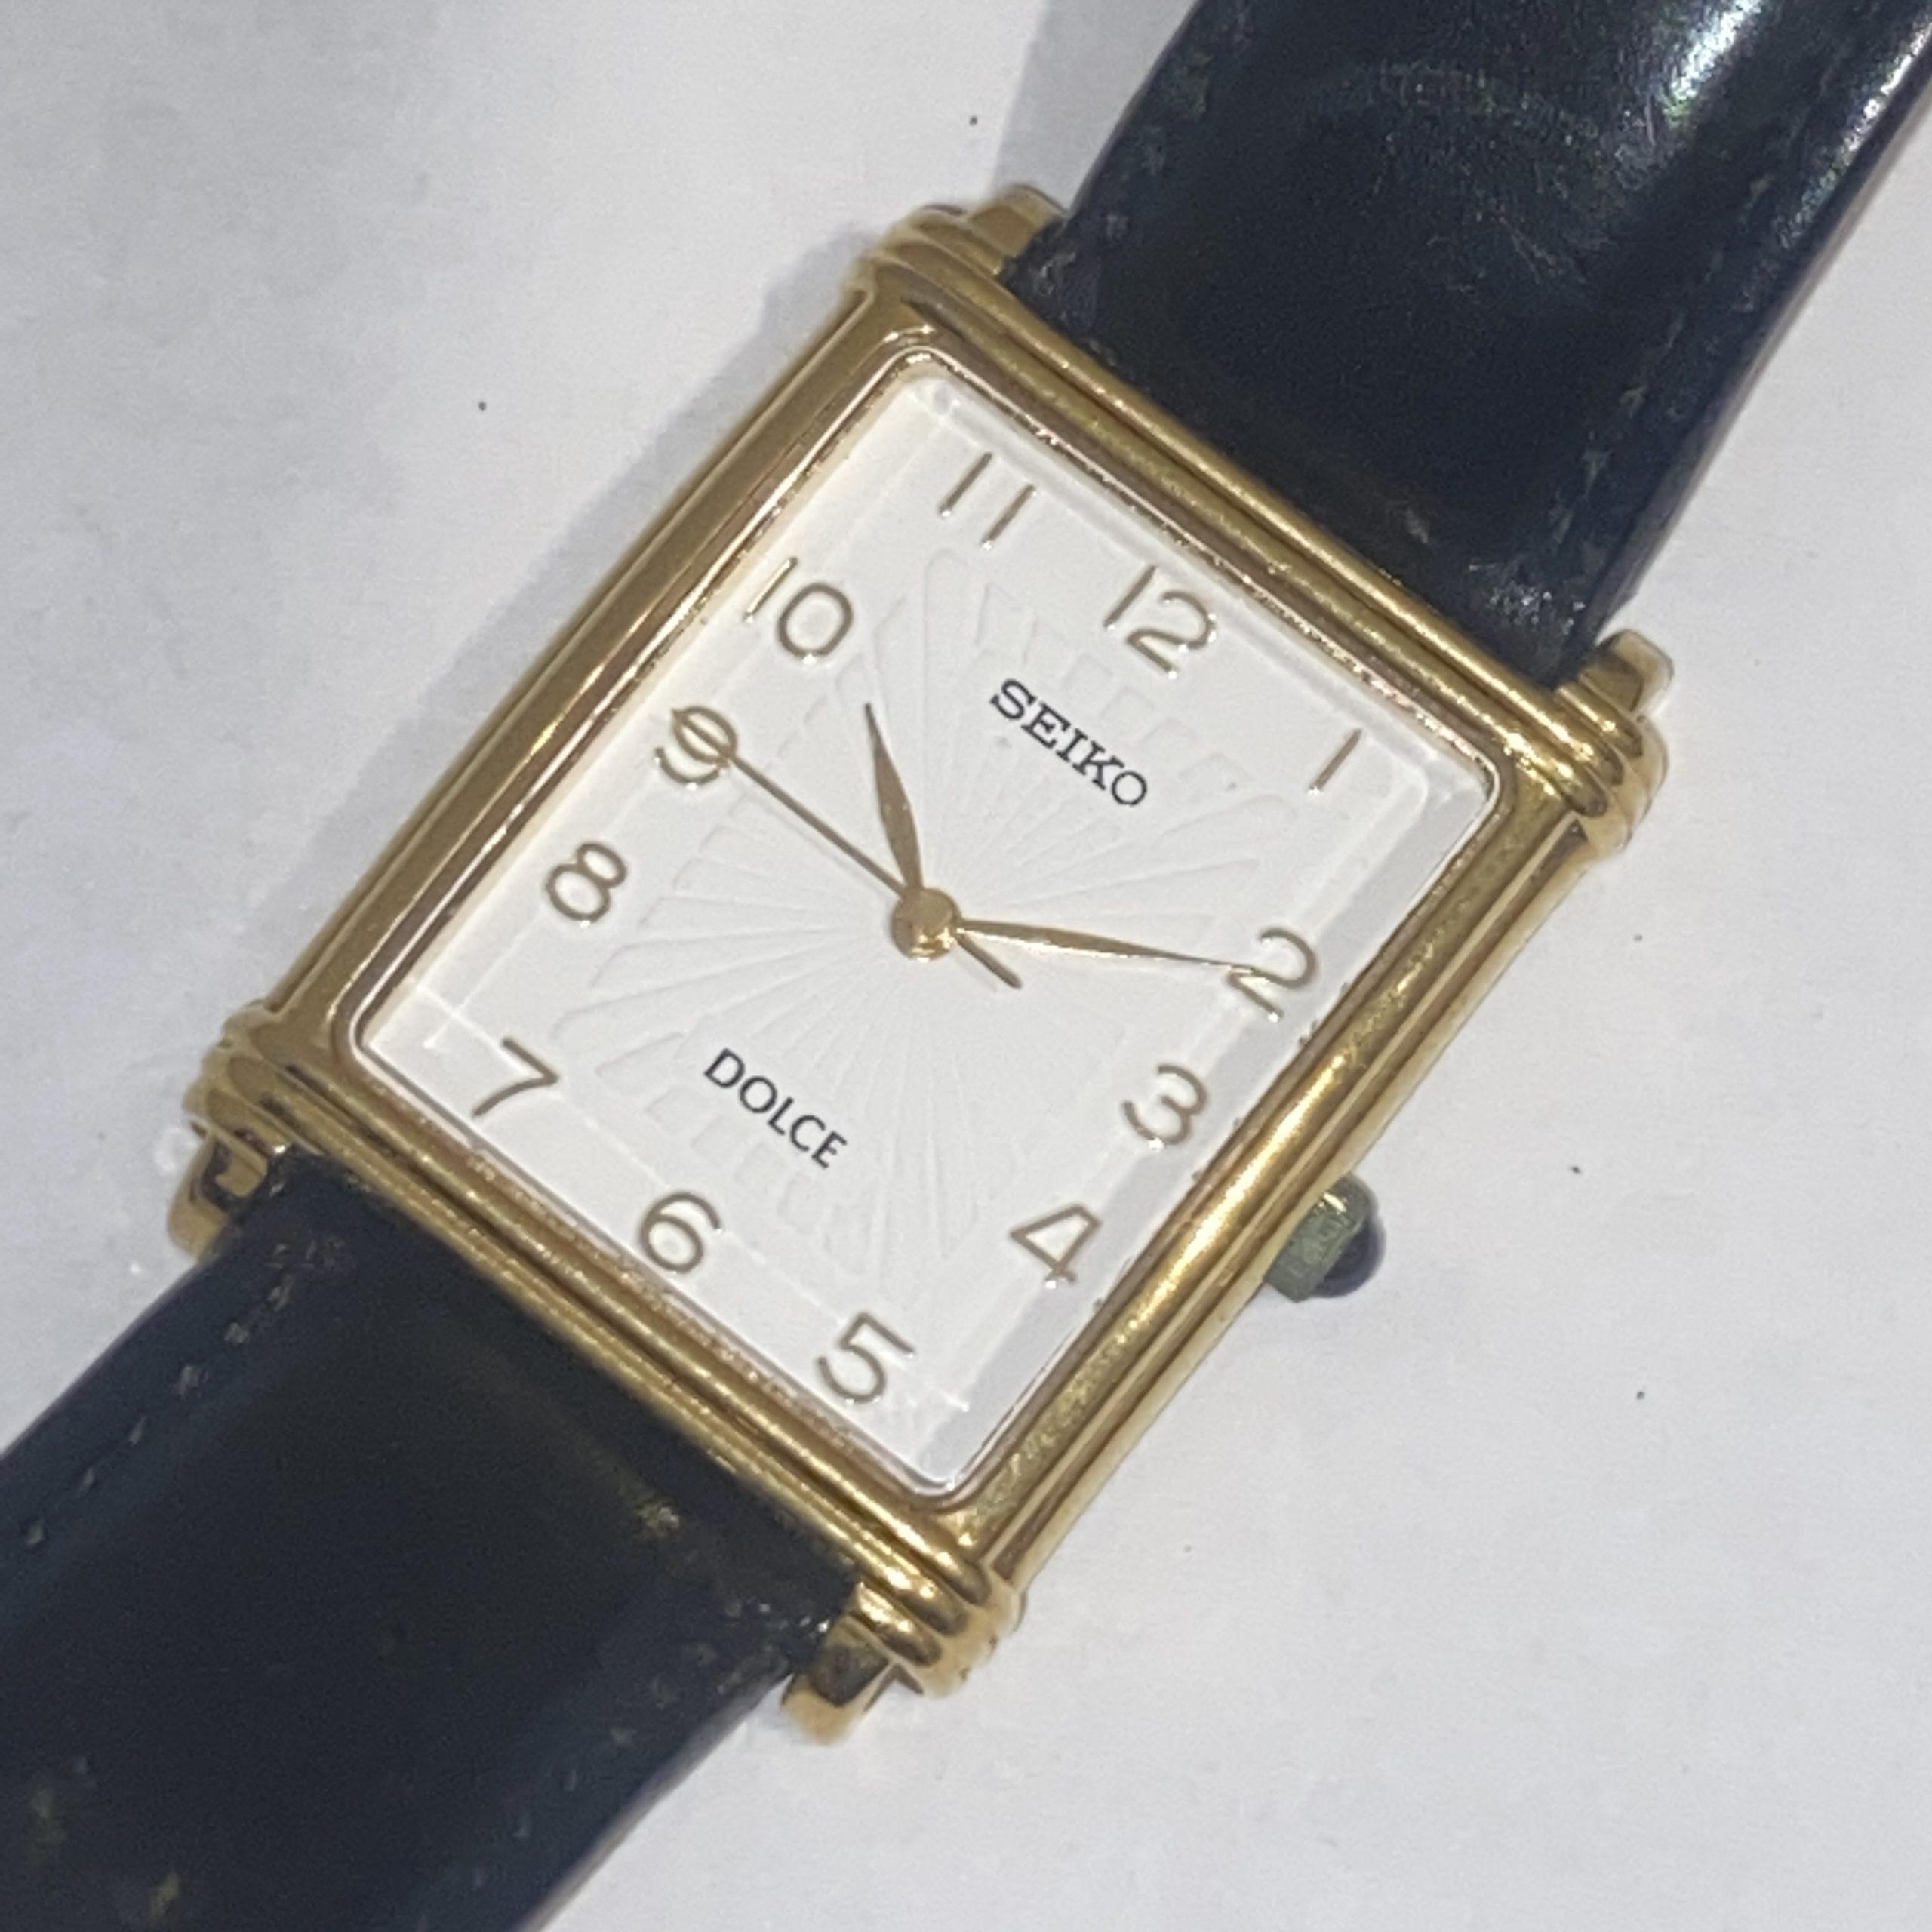 【SEIKO/セイコー】クオーツ DOLCE/ドルチェ 8N41-5190 レディース腕時計